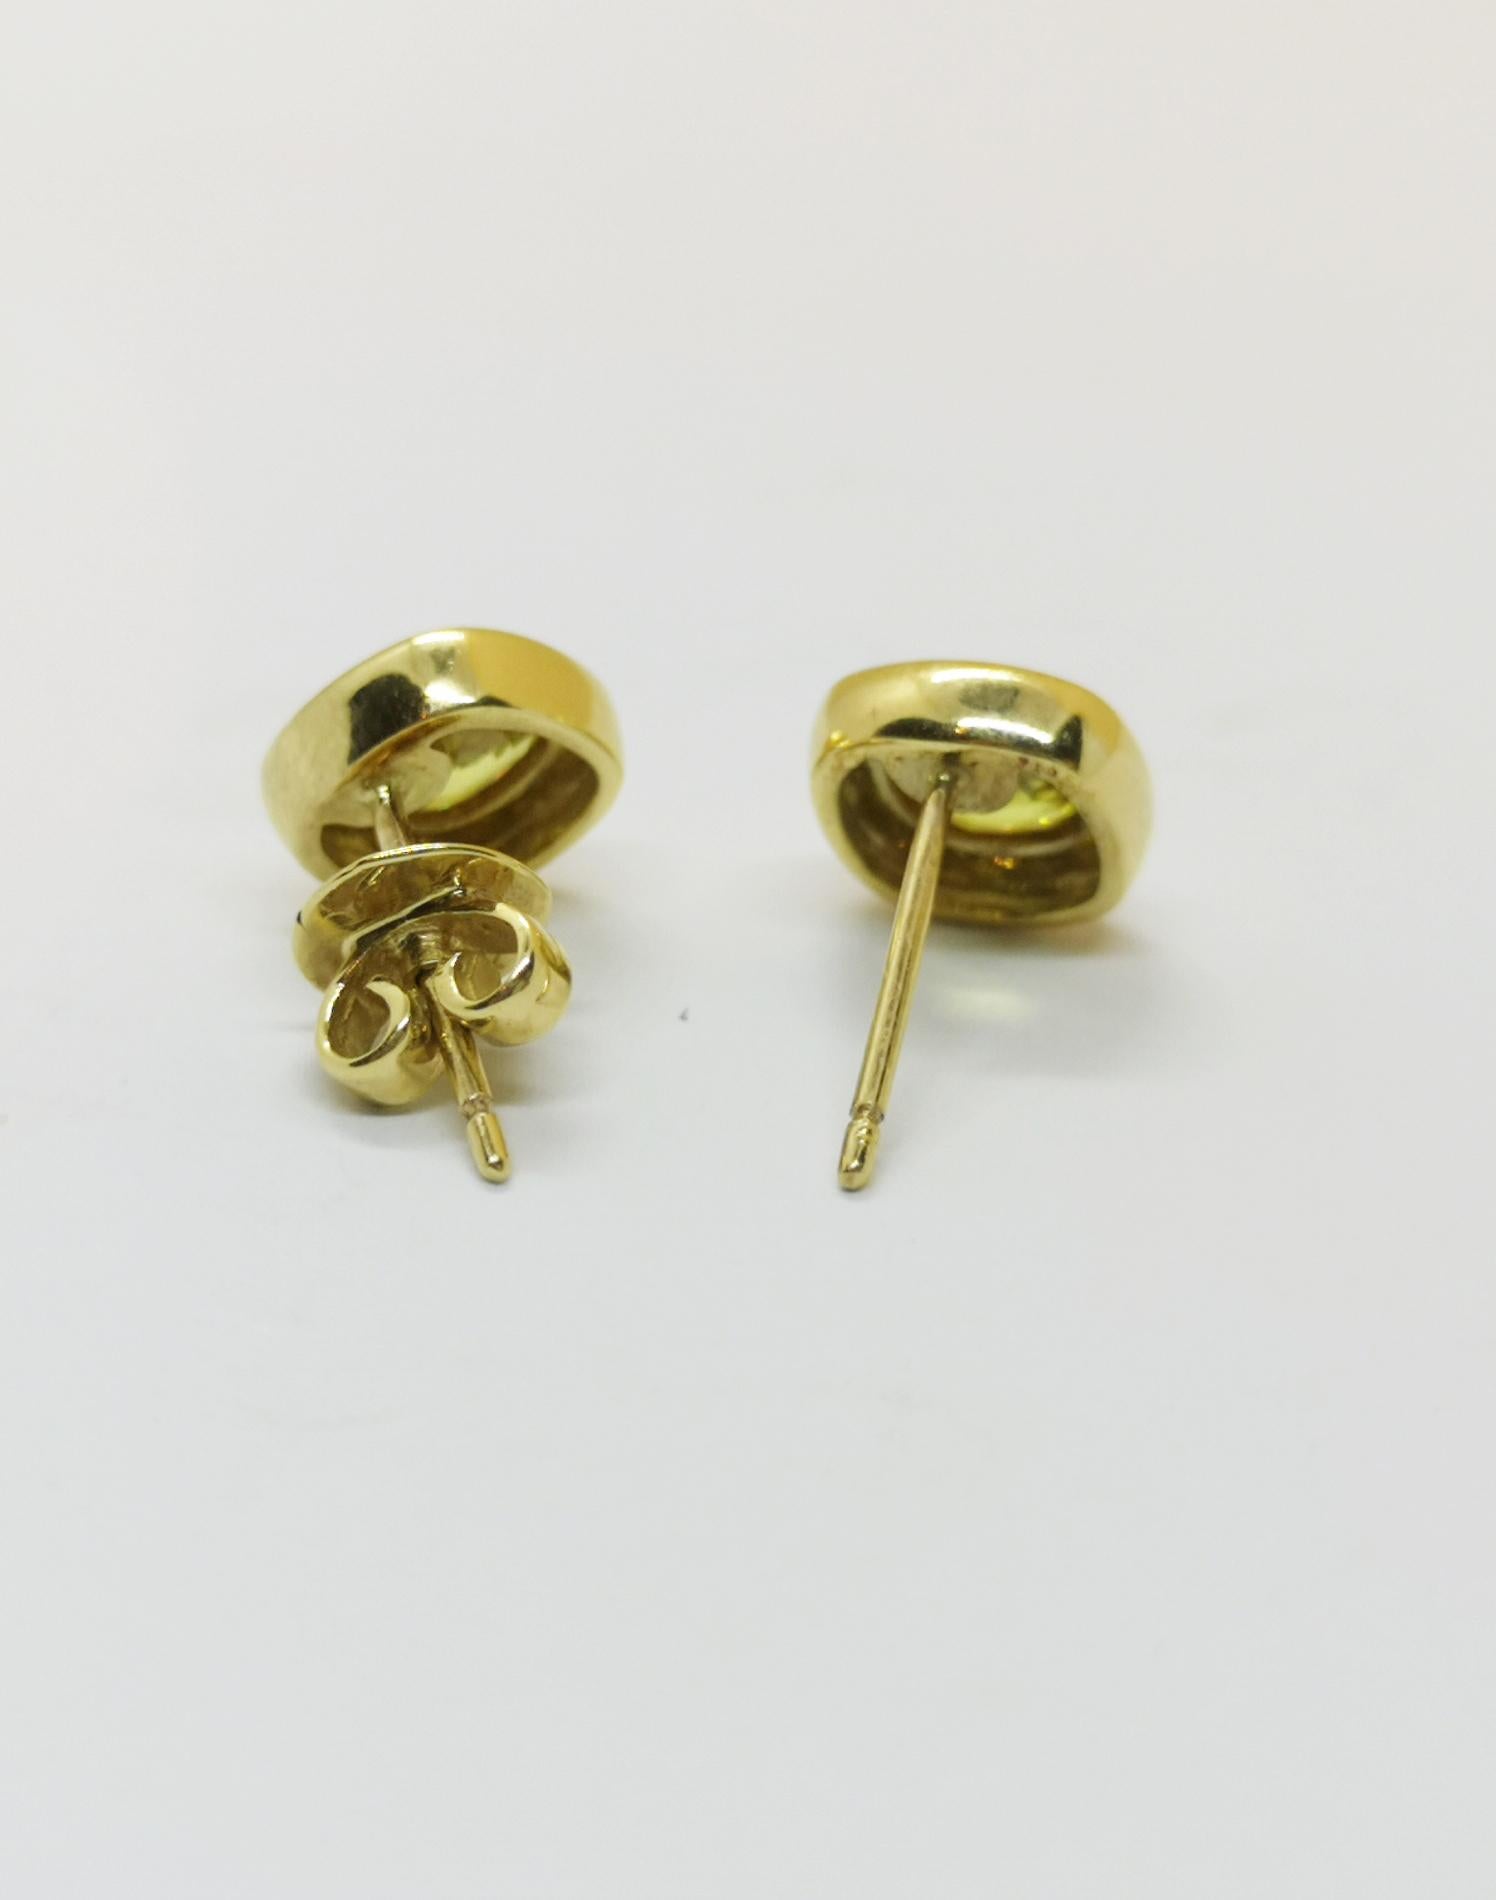 Yellow Sapphire 2.07 carats Earrings set in 18 Karat Gold Settings 

Width: 0.9 cm
Length: 0.9 cm 

